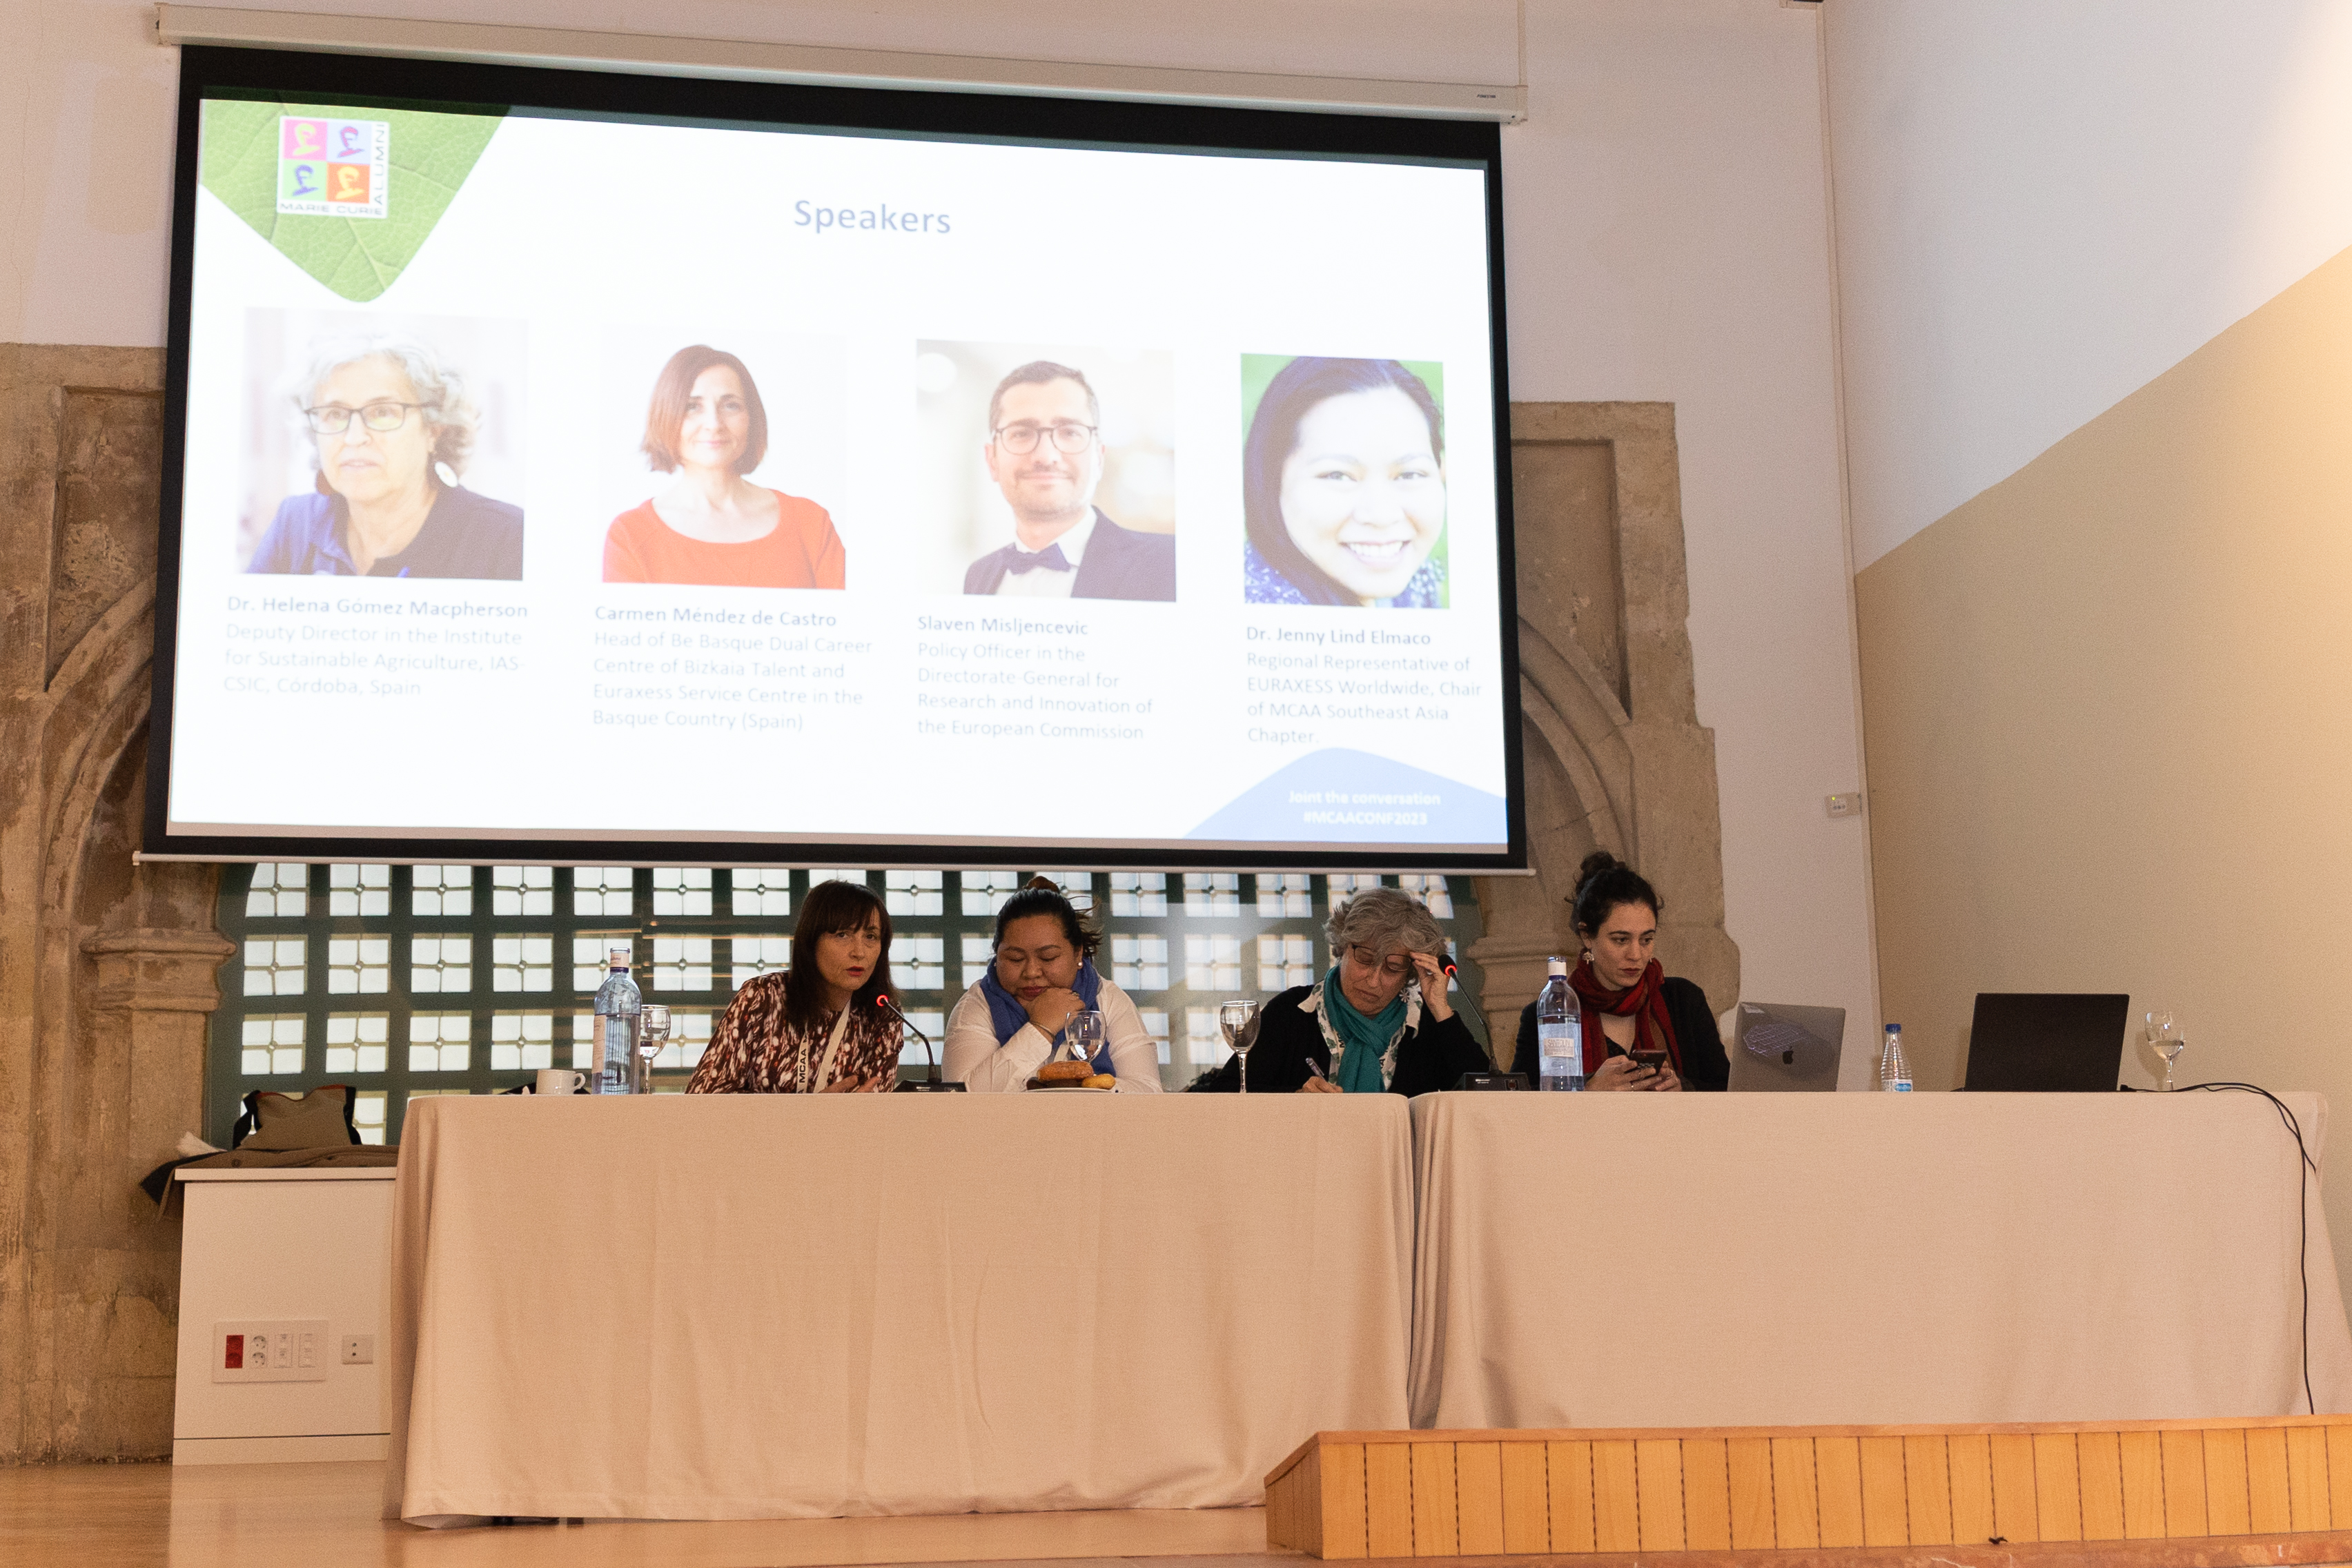 Maria Pérez Lloret and the expert panel featuring Helena Gómez Macpherson, Jenny Lind Elmaco, Carmen Mendez De Castro and Slaven Misljncevic (joined virtually)